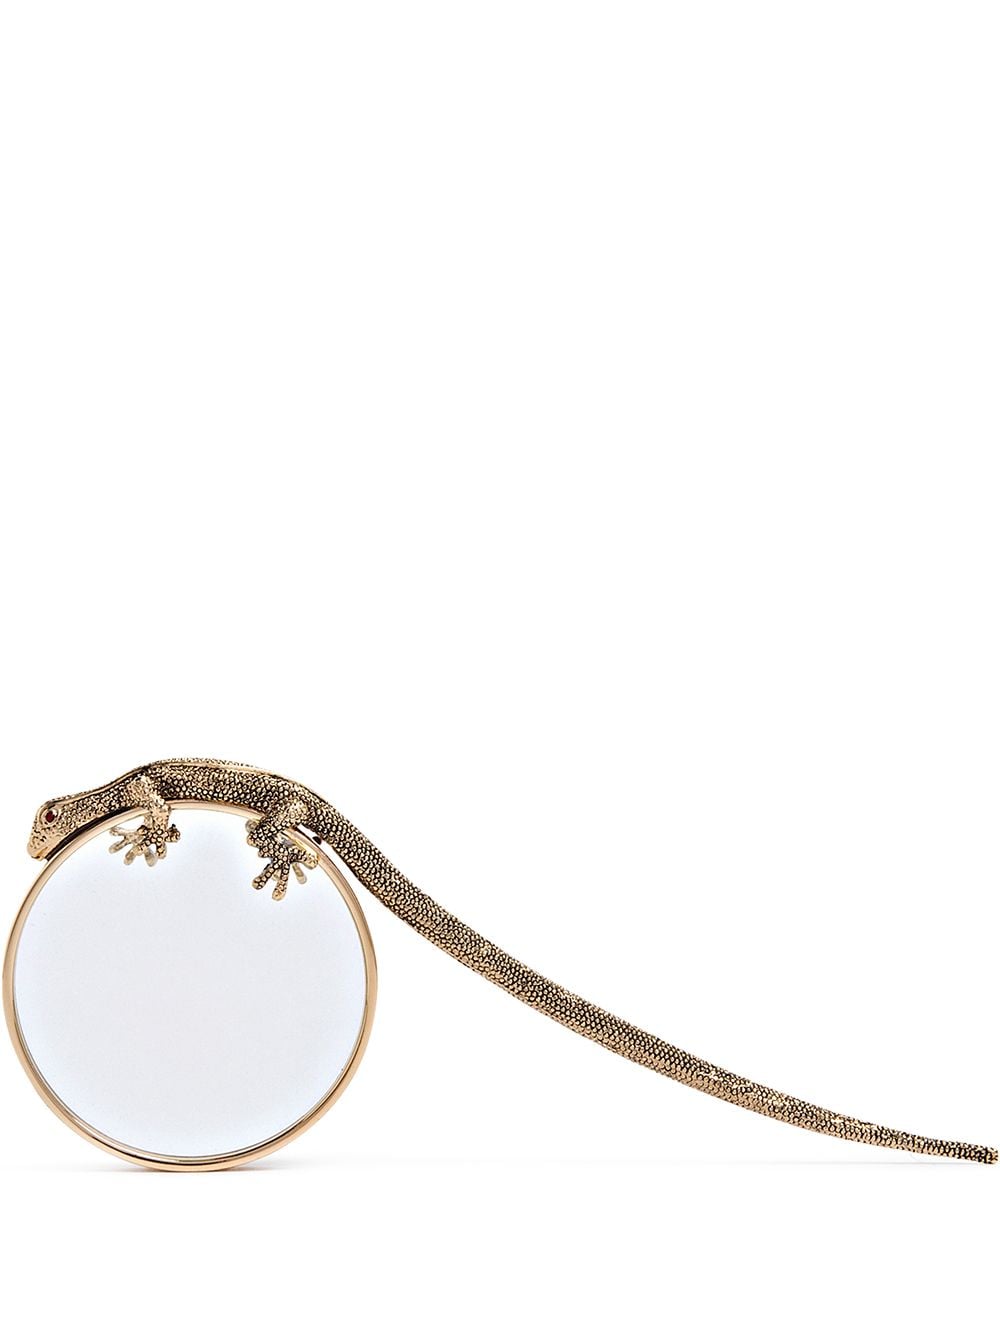 L'Objet Gecko magnifying glass - Gold von L'Objet